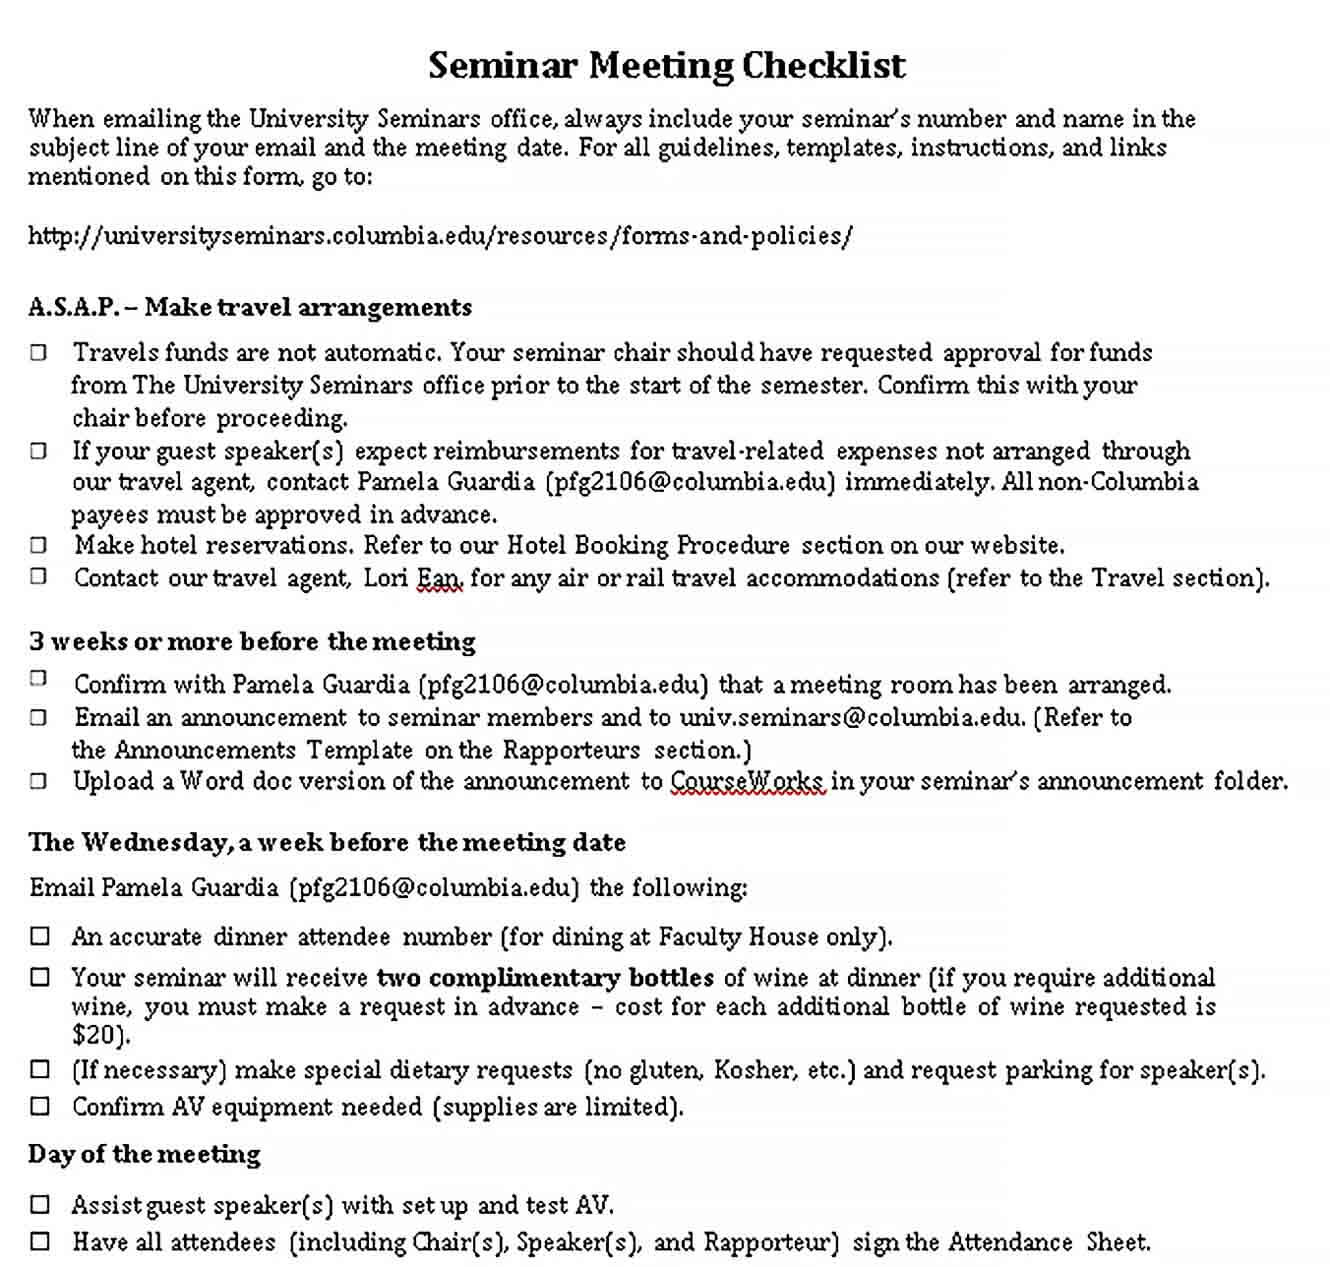 Sample Seminar Meeting Checklist